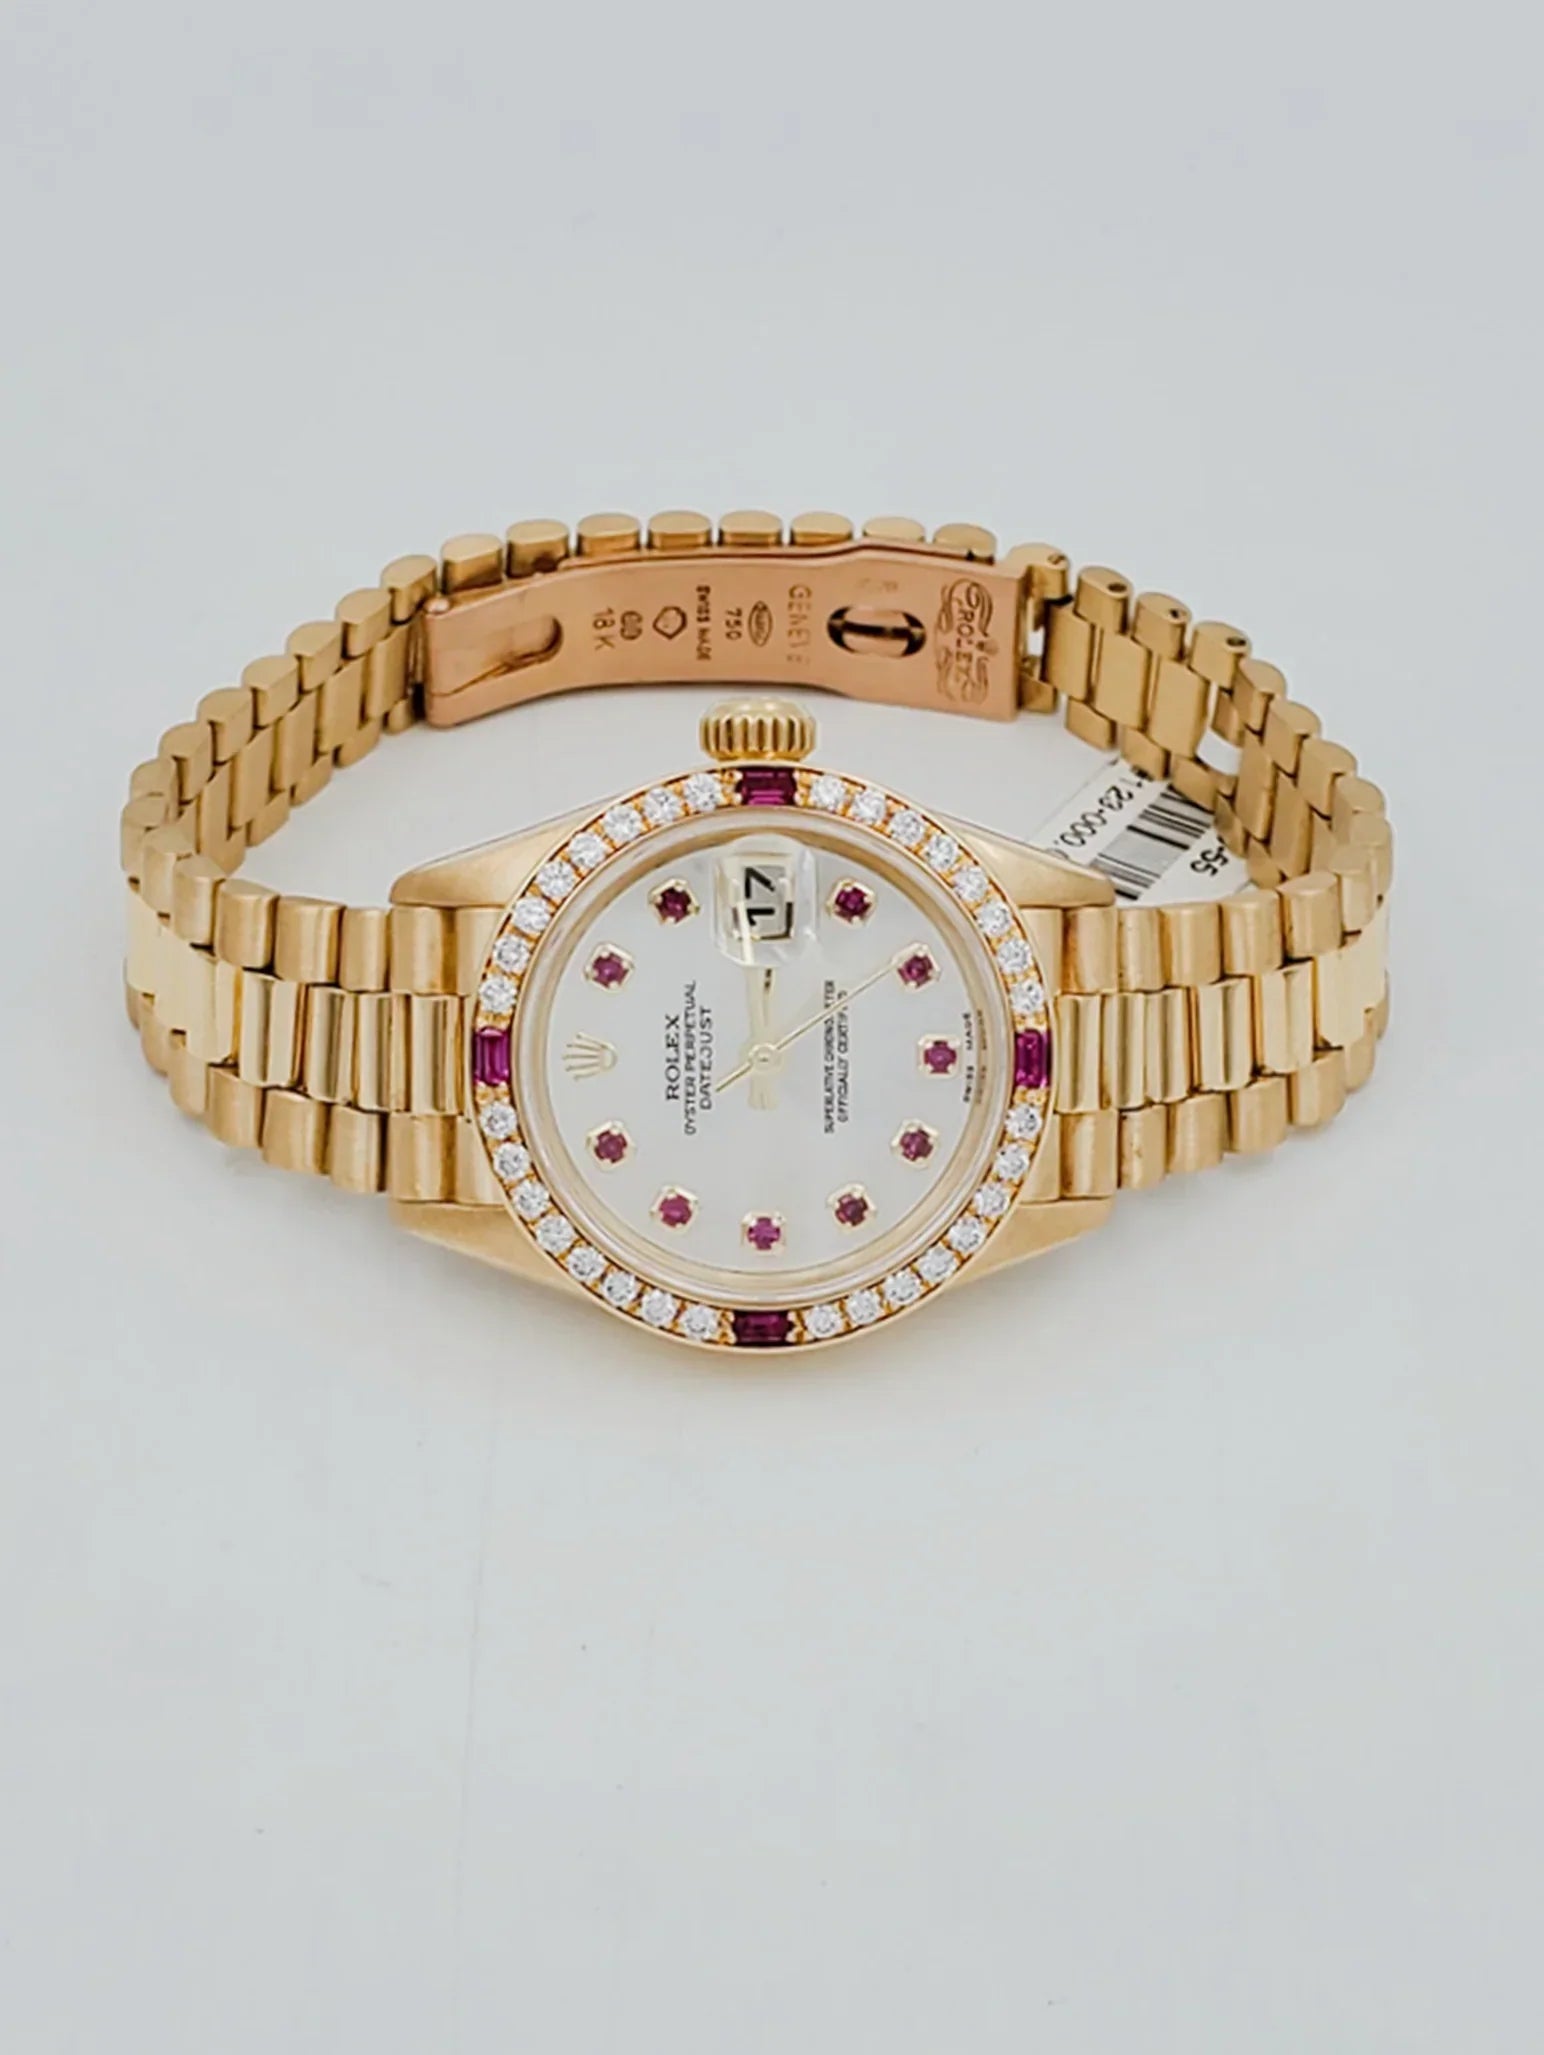 Ladies Rolex 26mm Presidential 18K Solid Yellow Gold Wristwatch w/ Mother of Pearl Ruby Dial & Diamond Bezel. (UNWORN 69178)